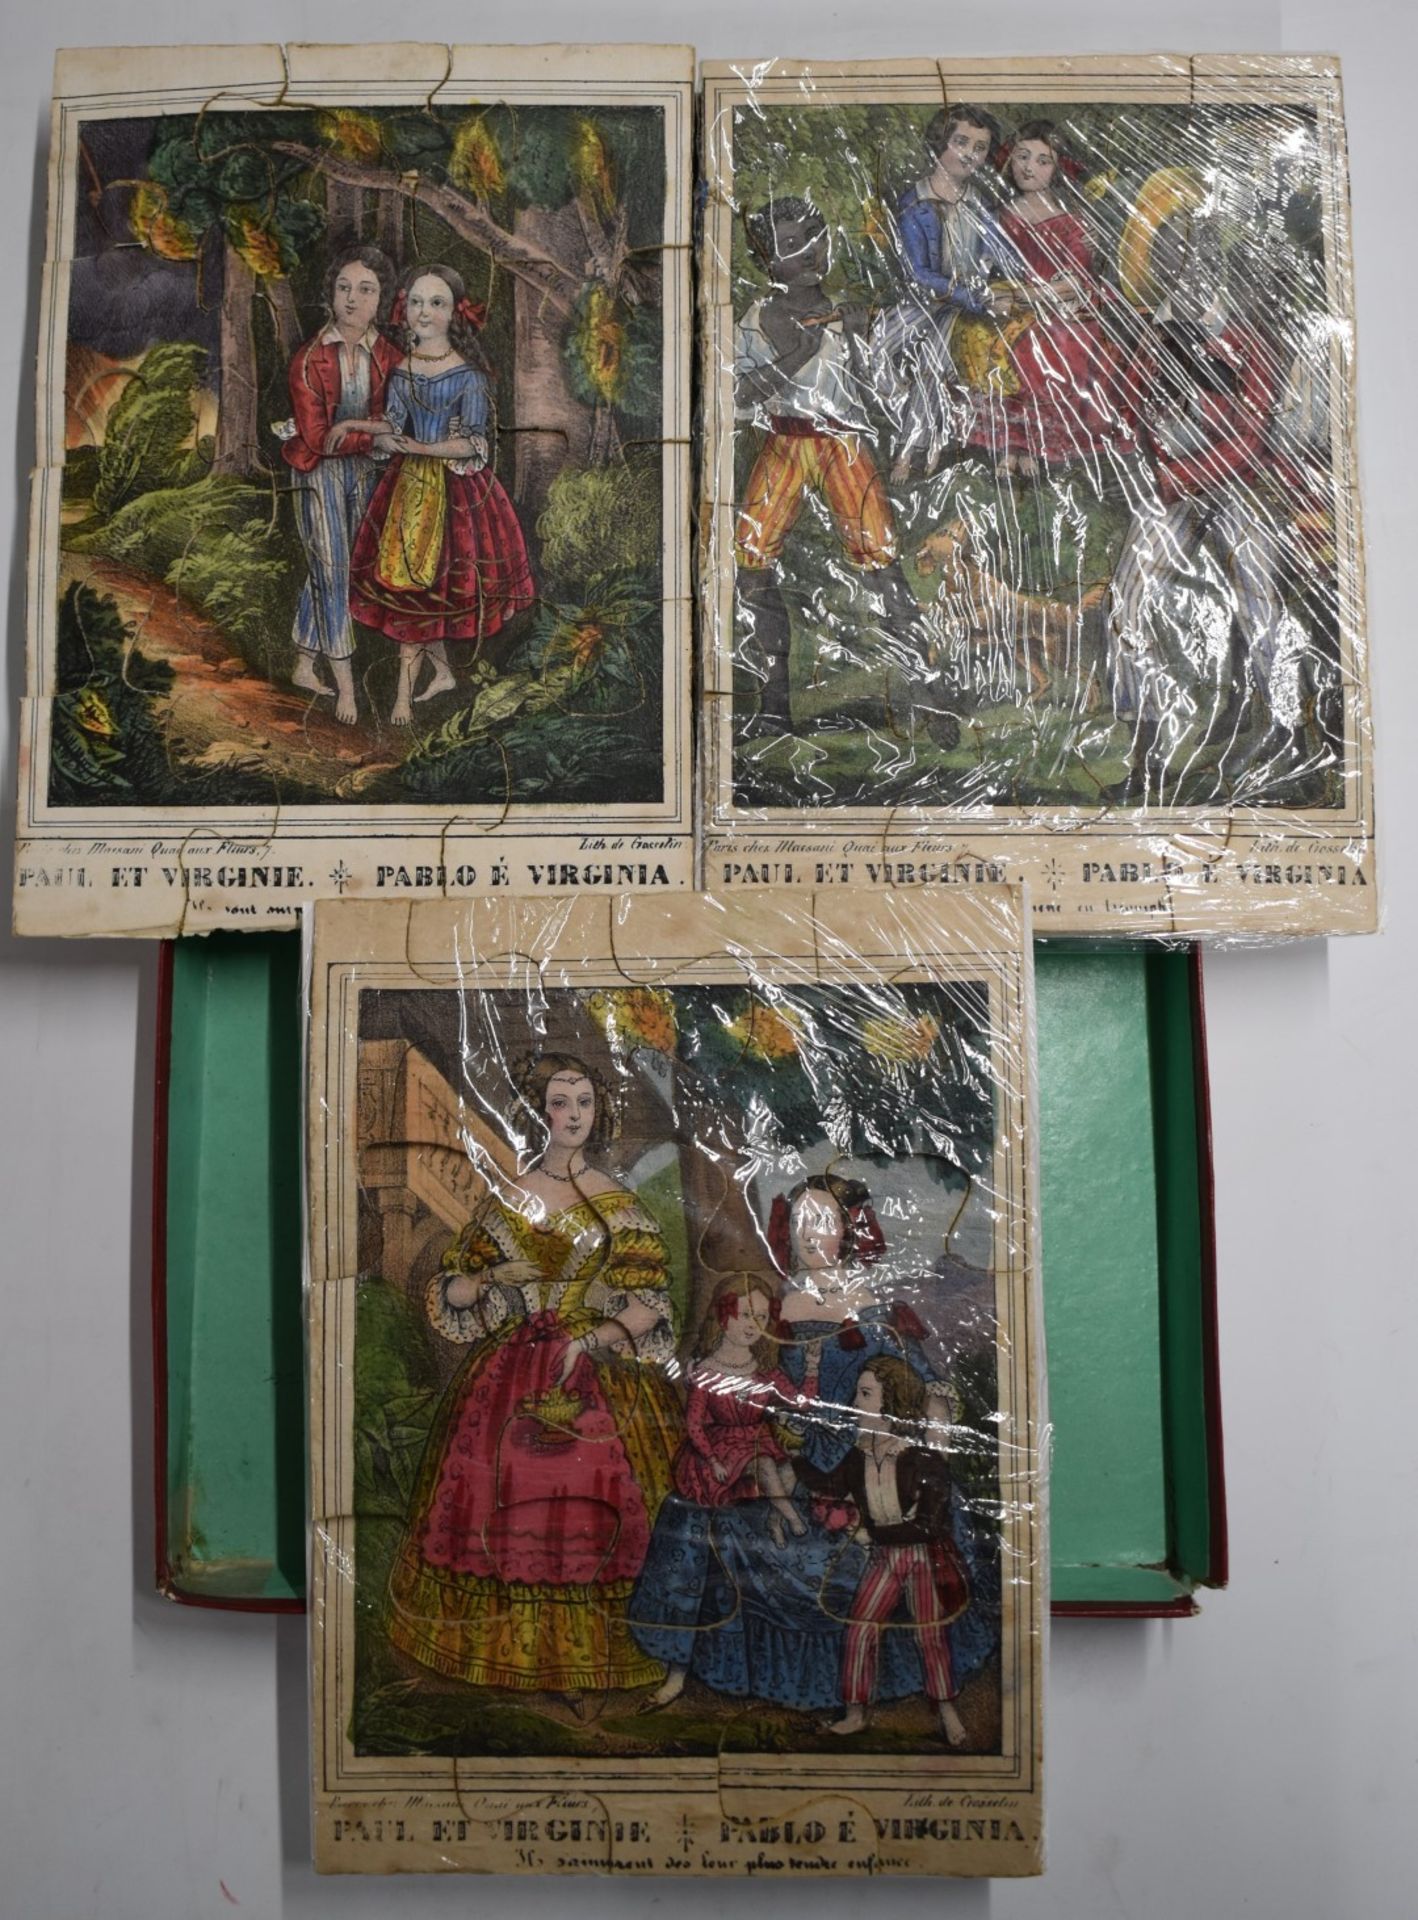 Paul Et Virginie (Paul & Virginia) group of three coloured Victorian jigsaw puzzles from the novel